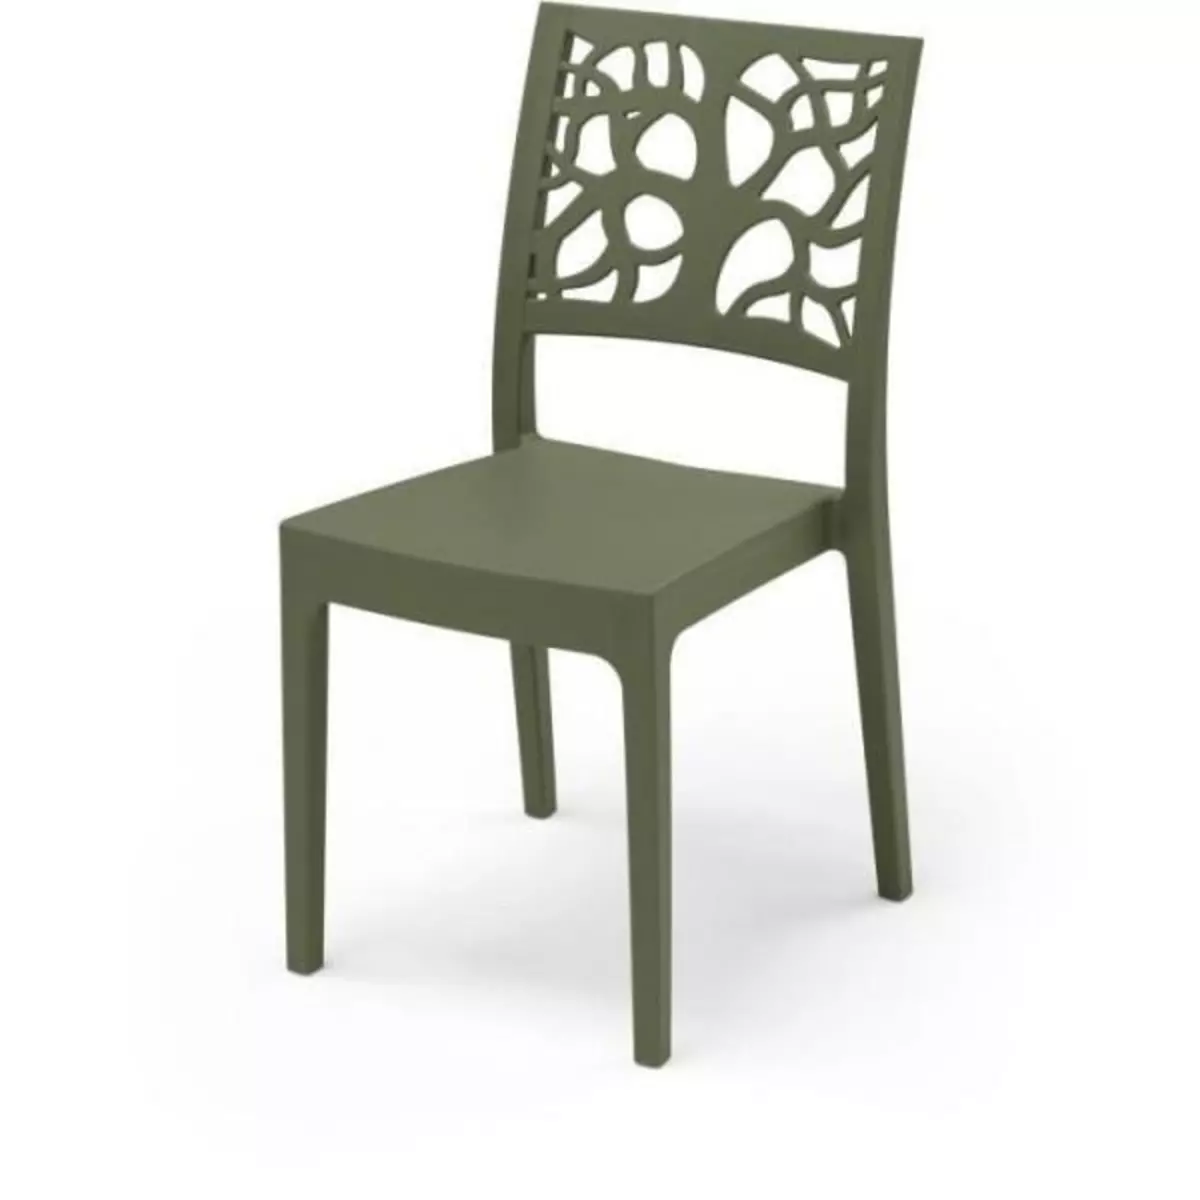 MARKET24 Lot de 4 chaises de jardin TETI ARETA - 52 x 46 x H 86 cm - Vert olive